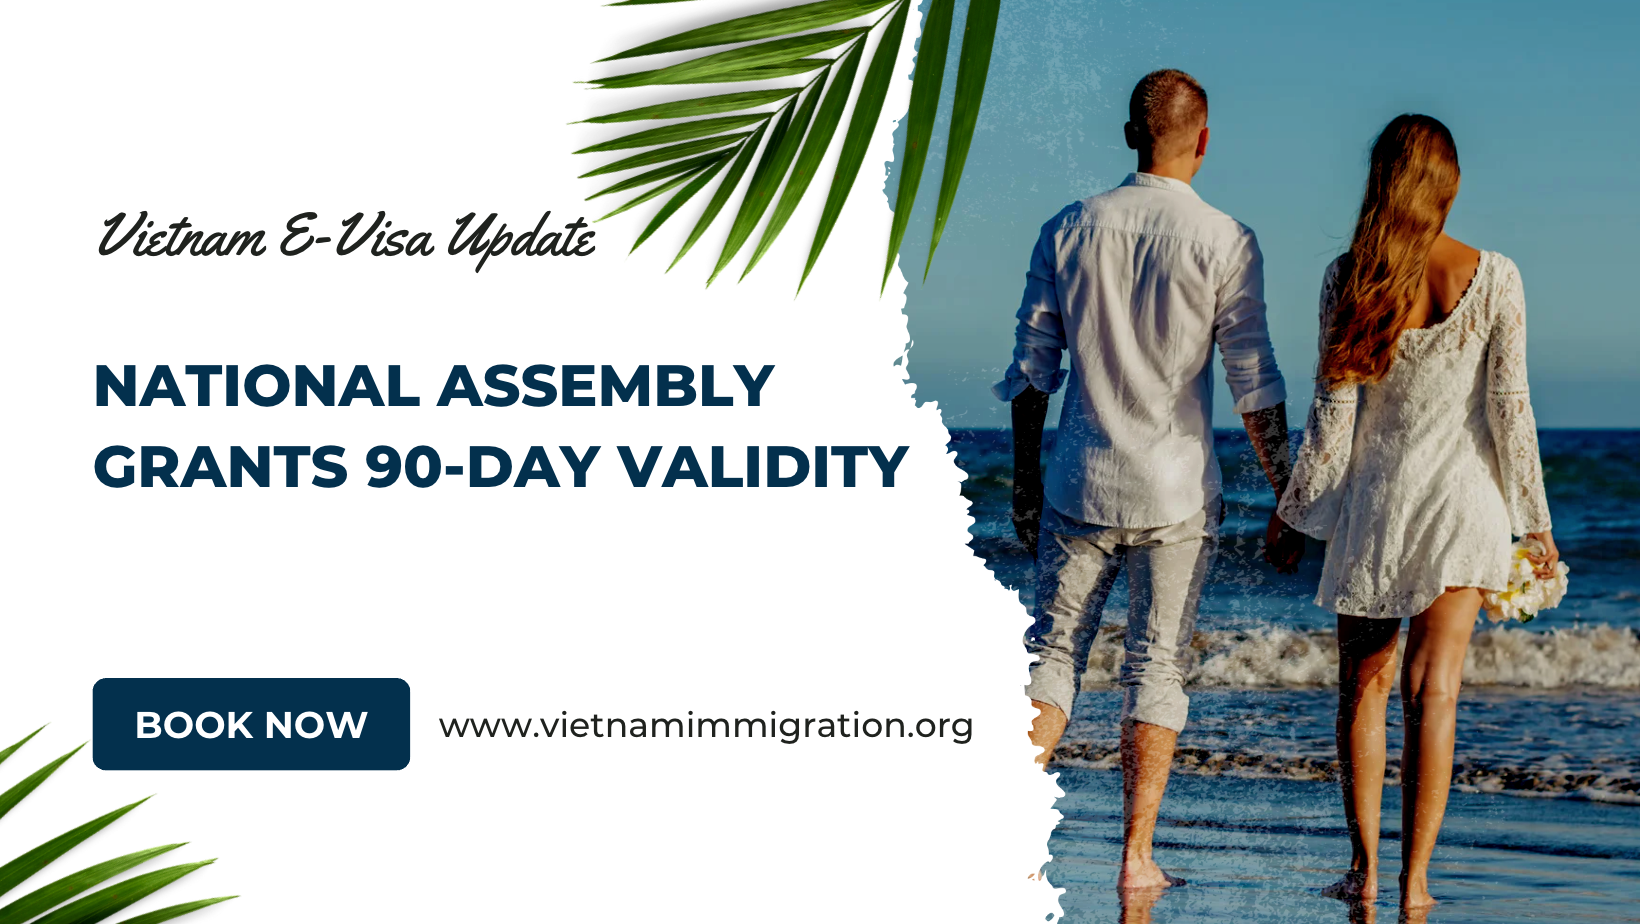 Vietnam E-Visa Update: National Assembly Grants 90-Day Validity